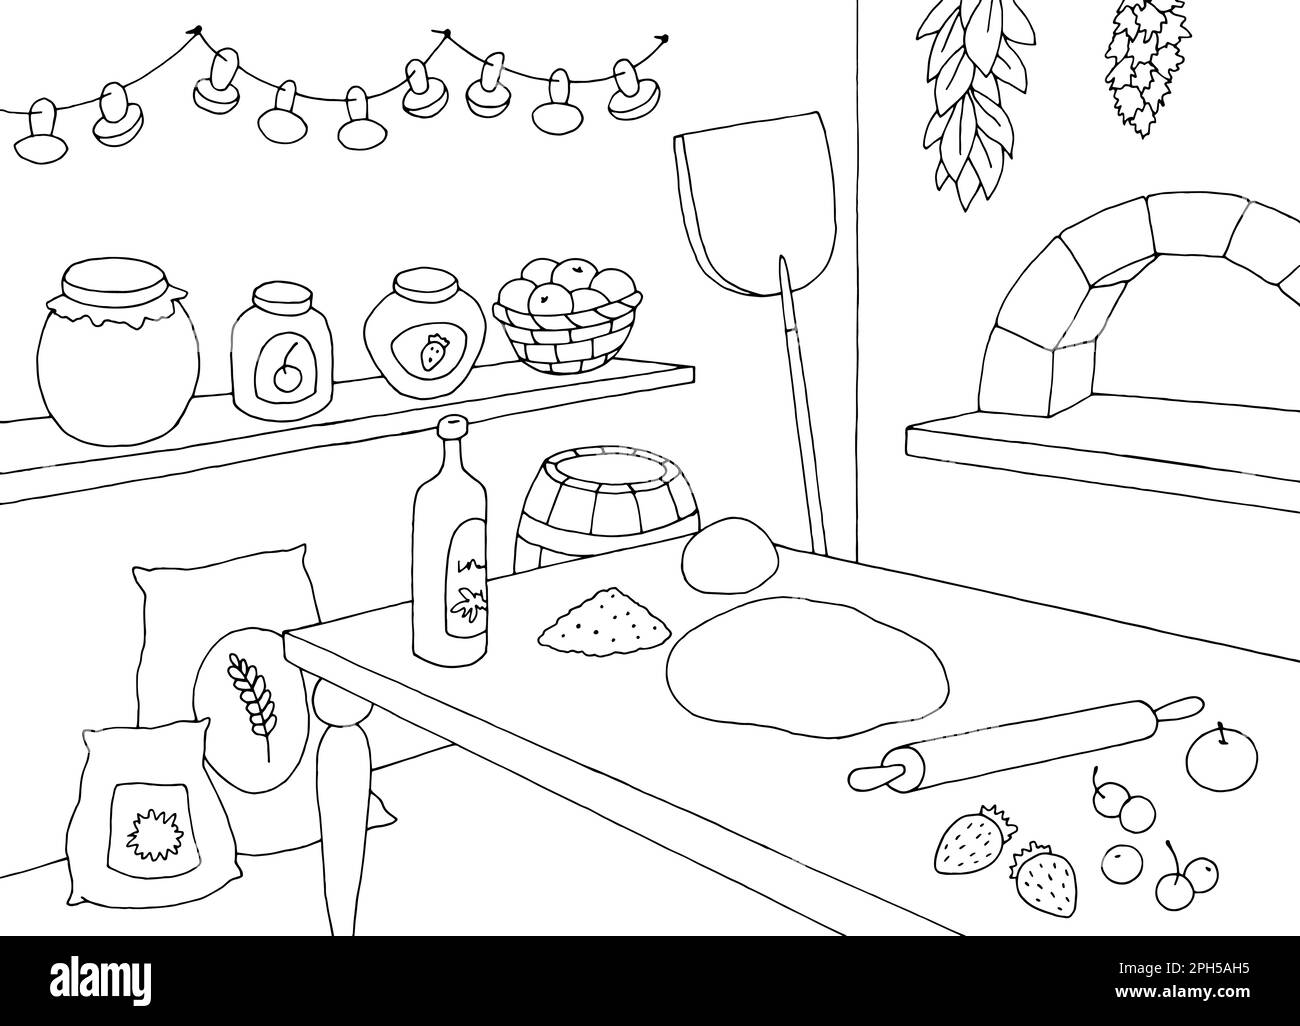 Bakery kitchen interior graphic black white sketch illustration vector Stock Vector